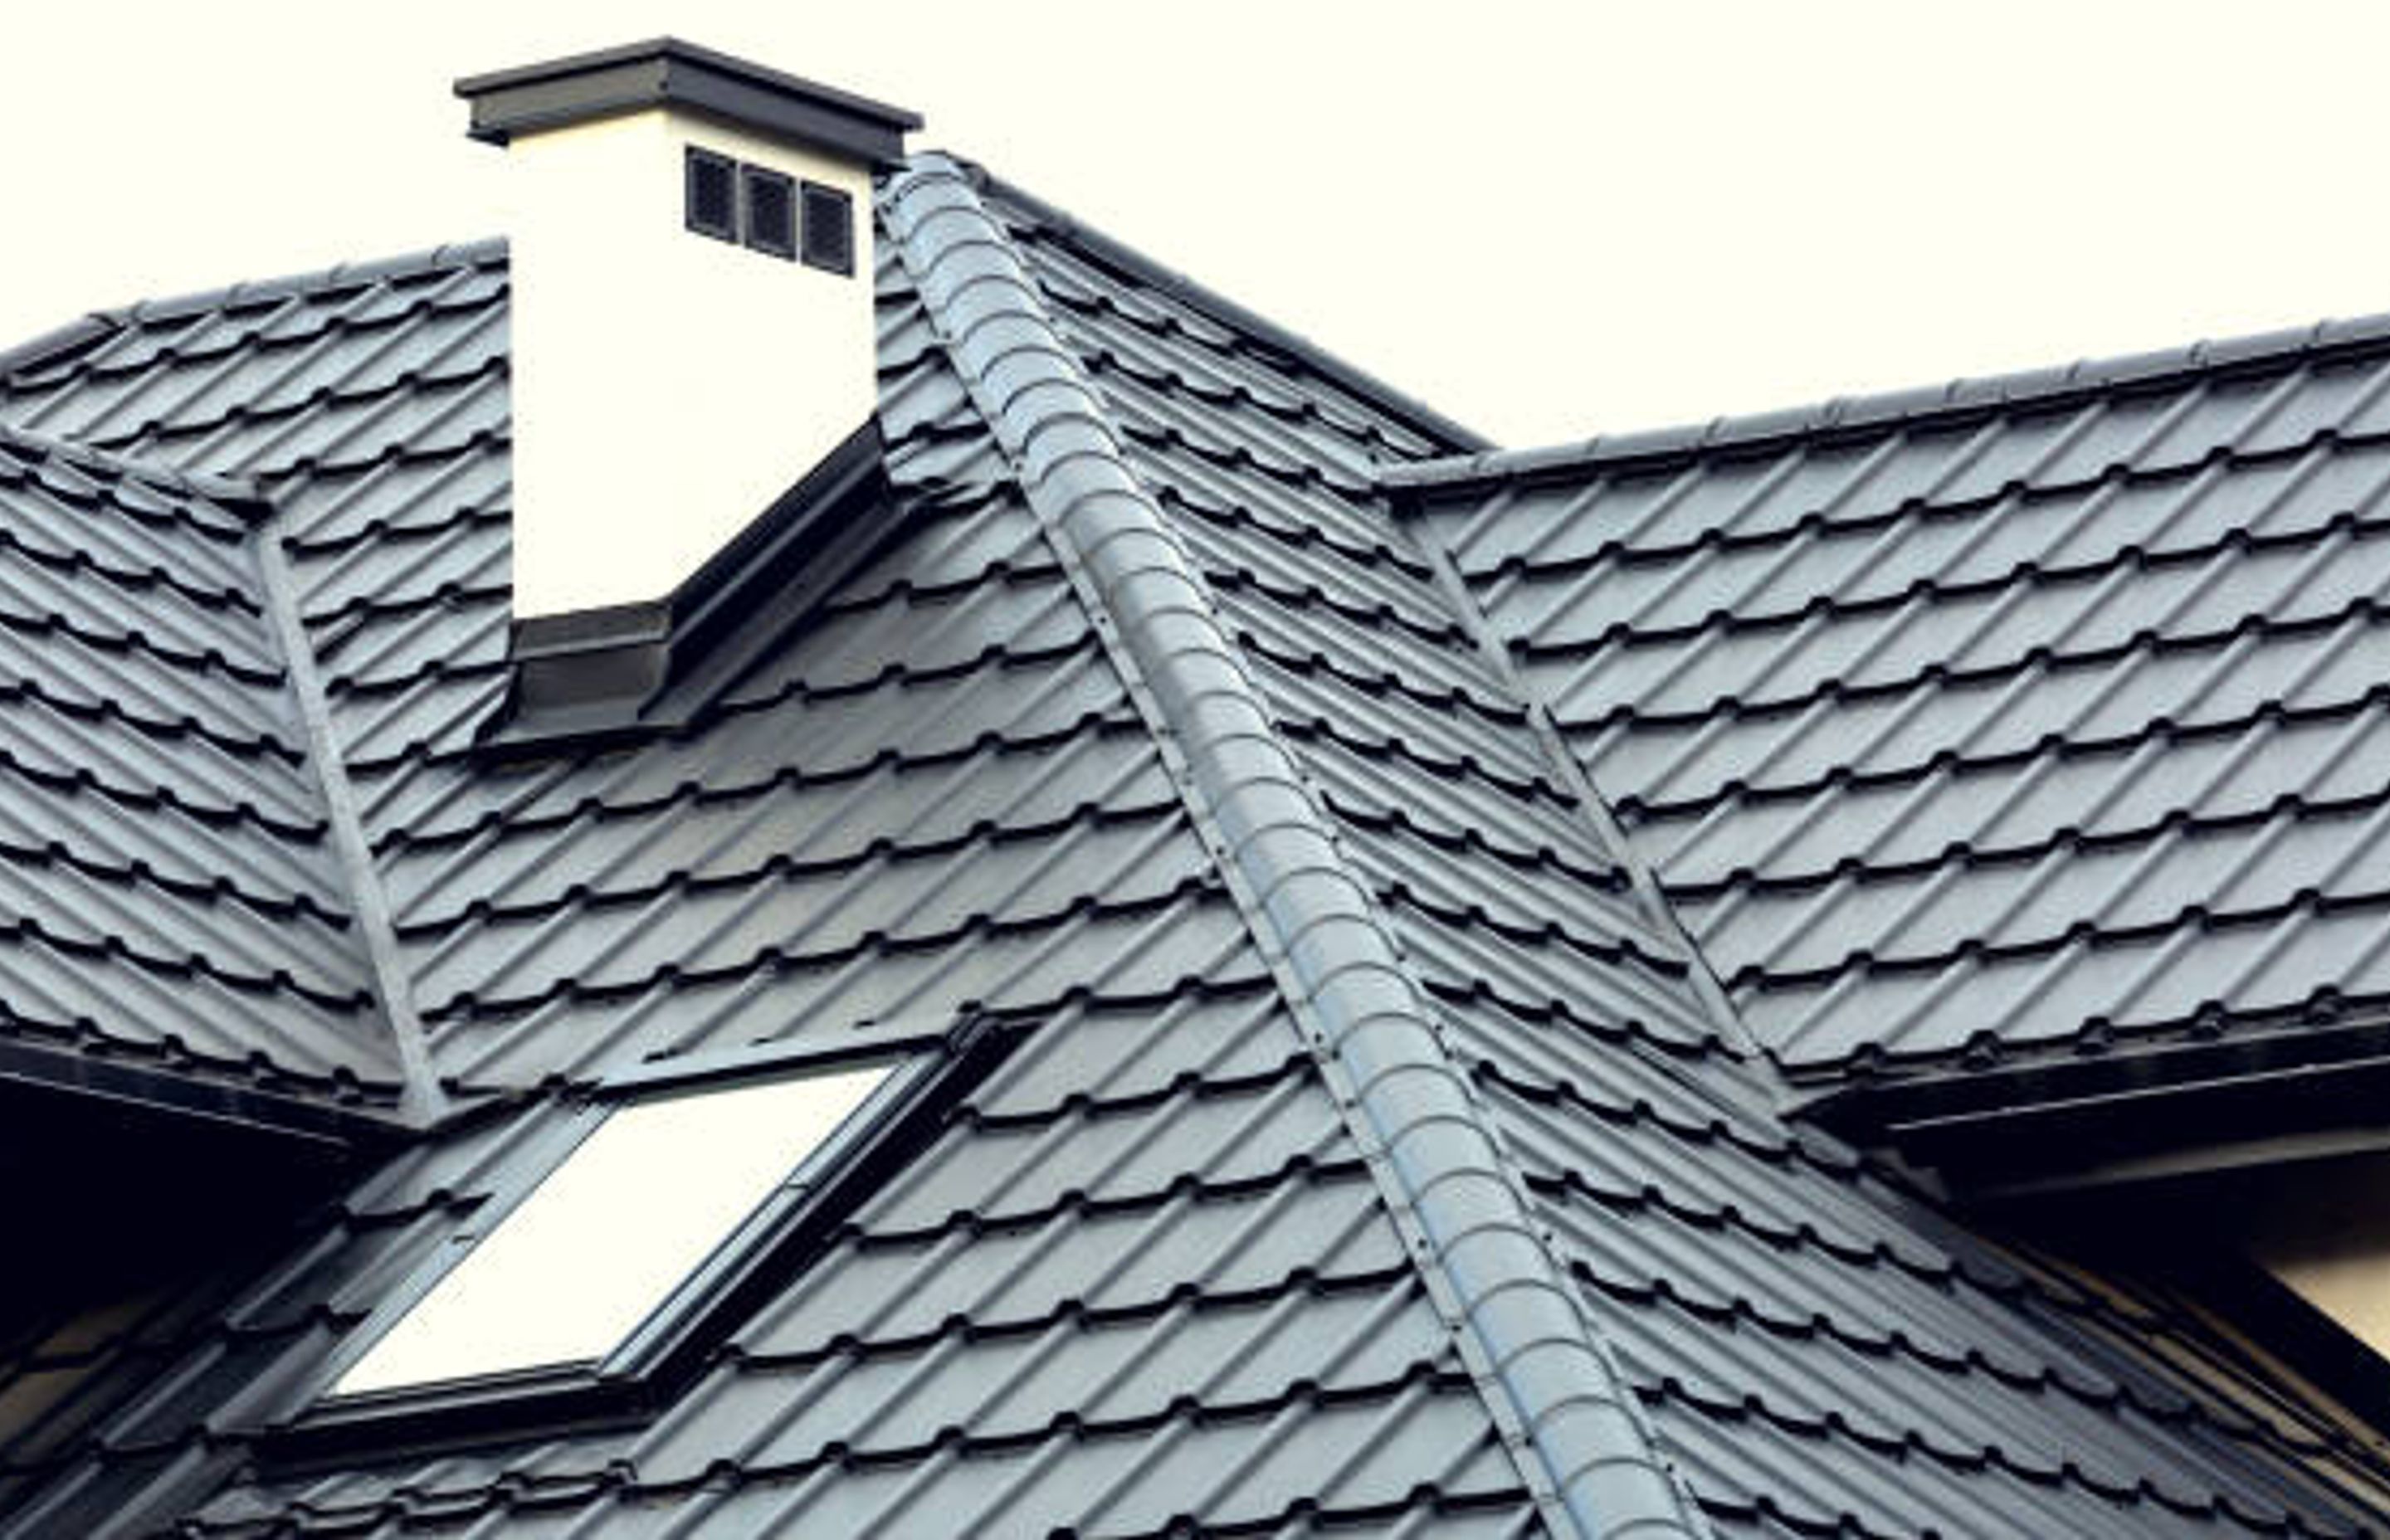 Steel Tiles on Roof | Photo Credit – iStock